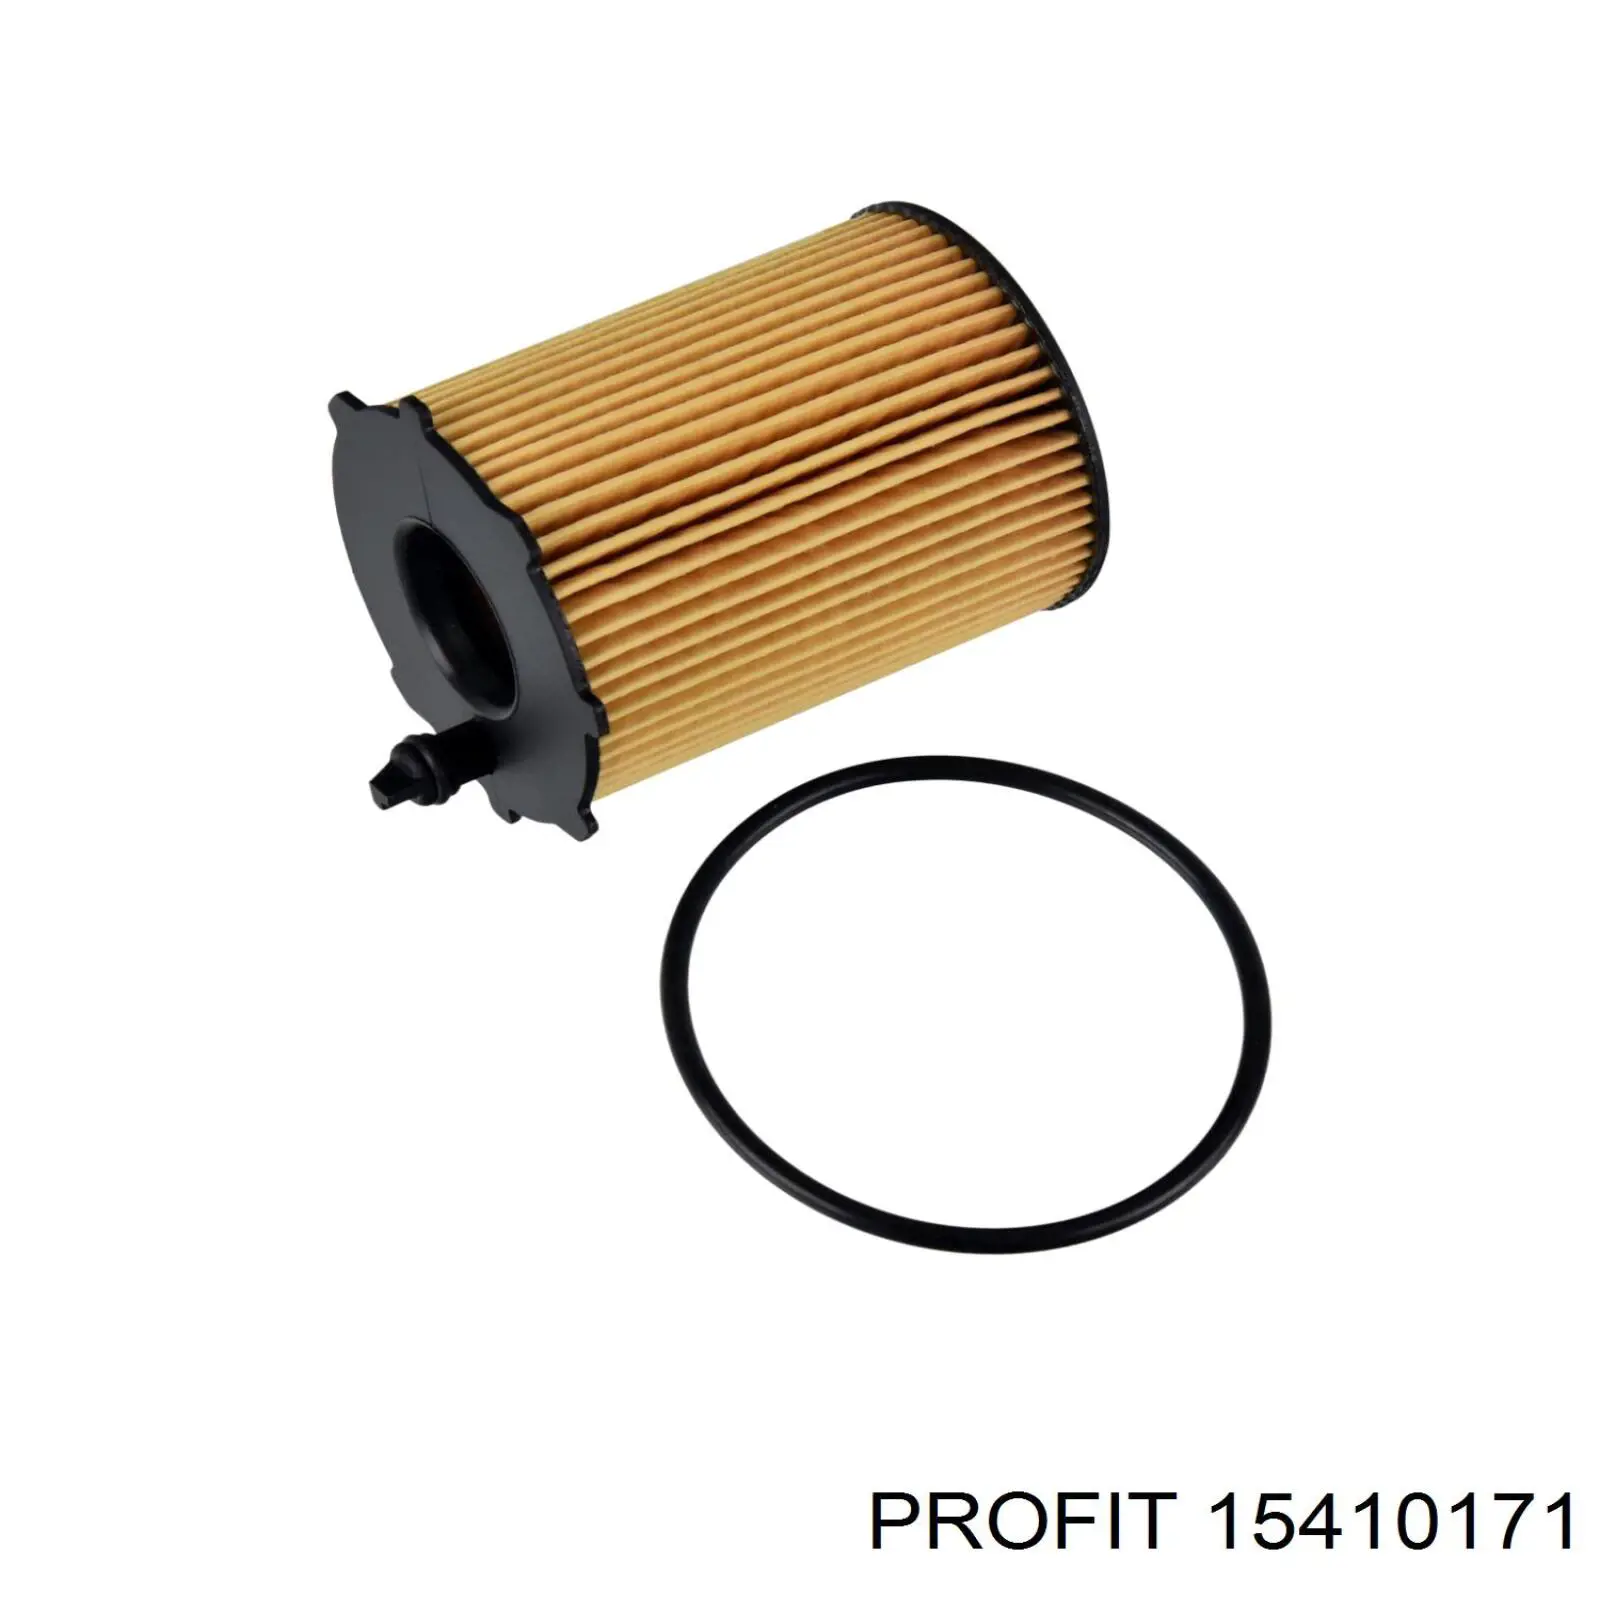 15410171 Profit filtro de aceite